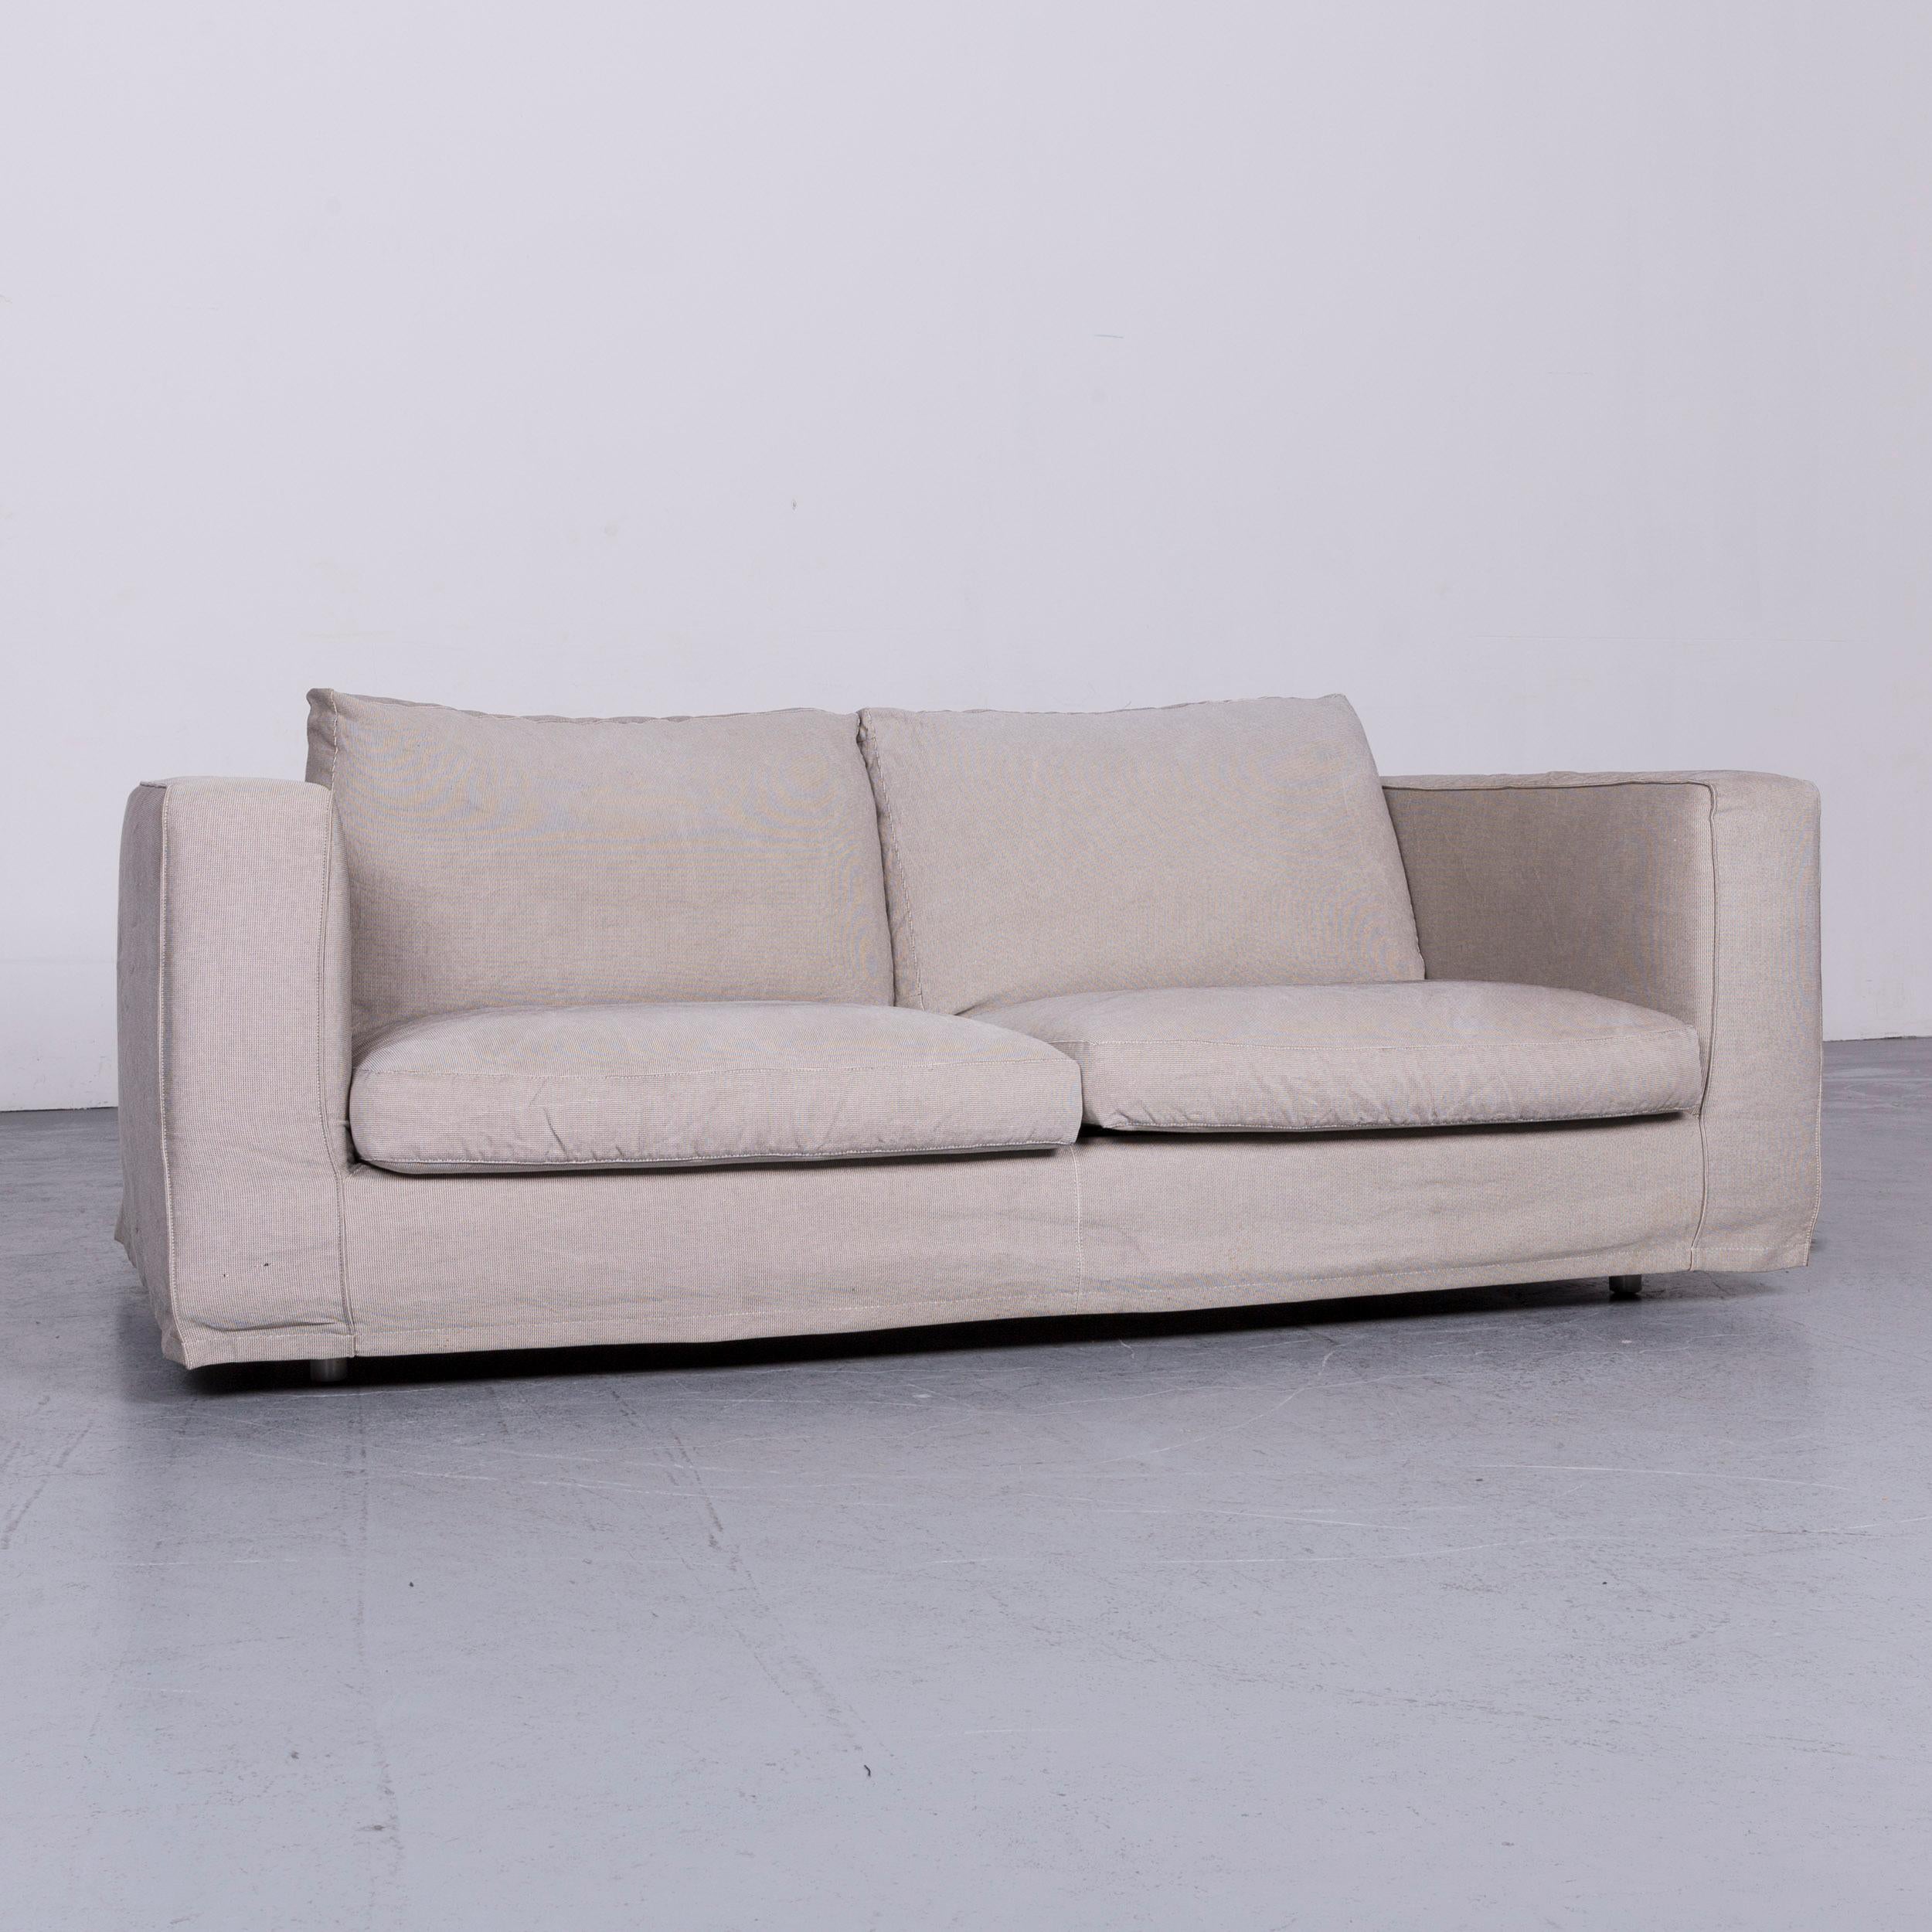 We bring to you an B&B Italia Basiko fabric sofa grey two-seat couch.